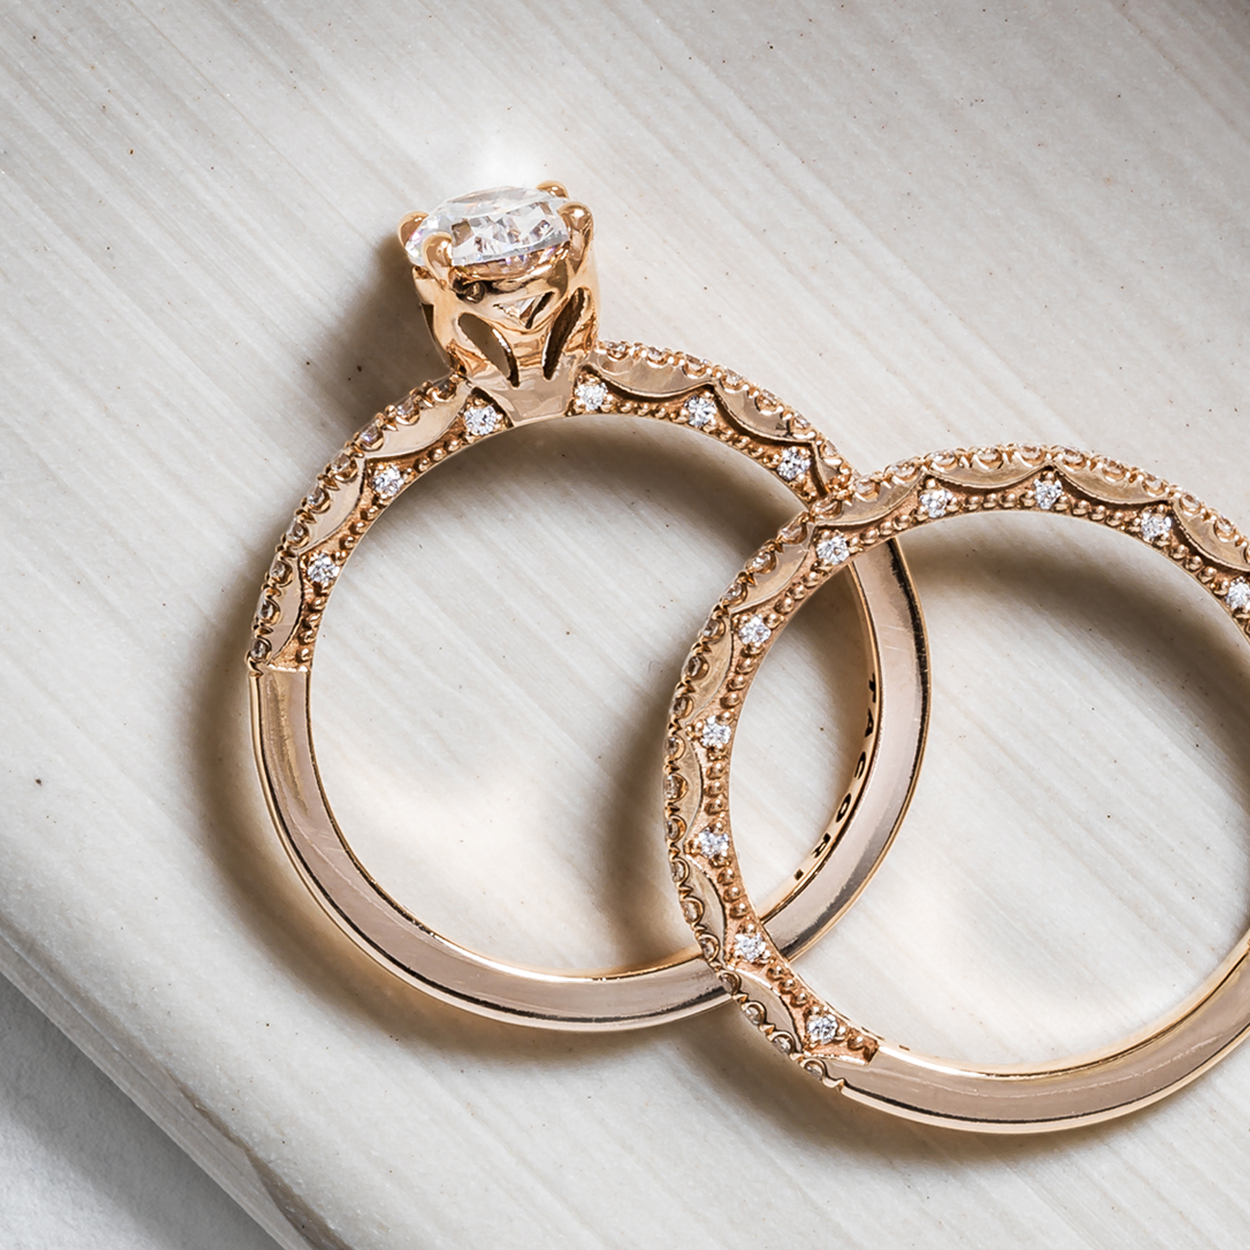 Swirl Design Diamond Ring Guard - McKenzie & Smiley Jewelers